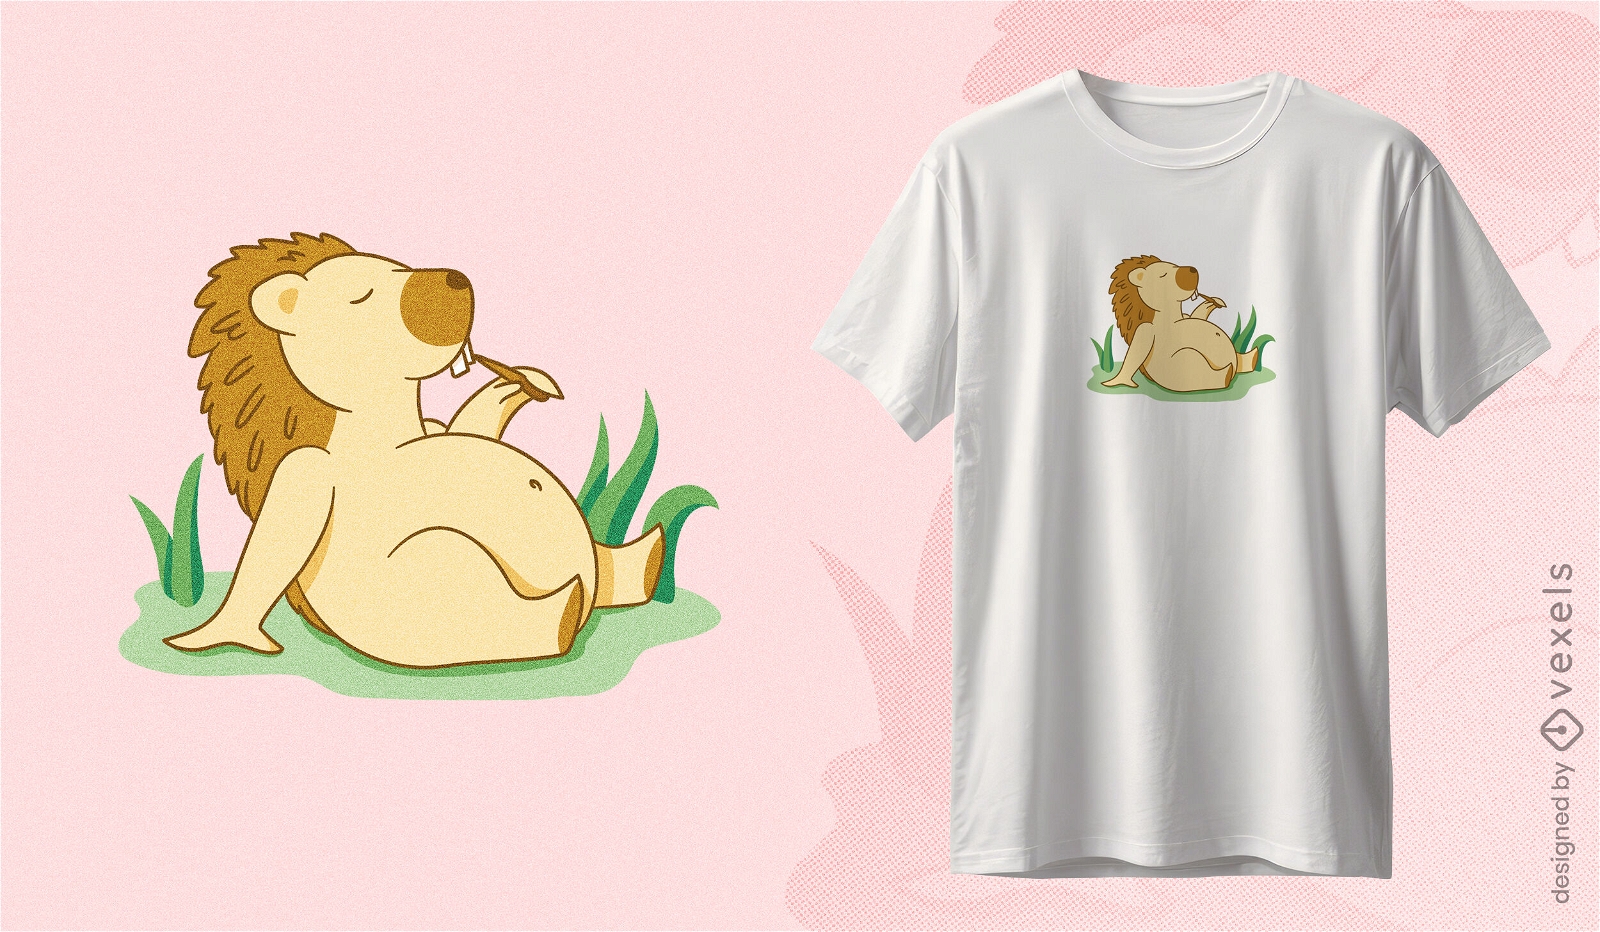 Lazy porcupine t-shirt design